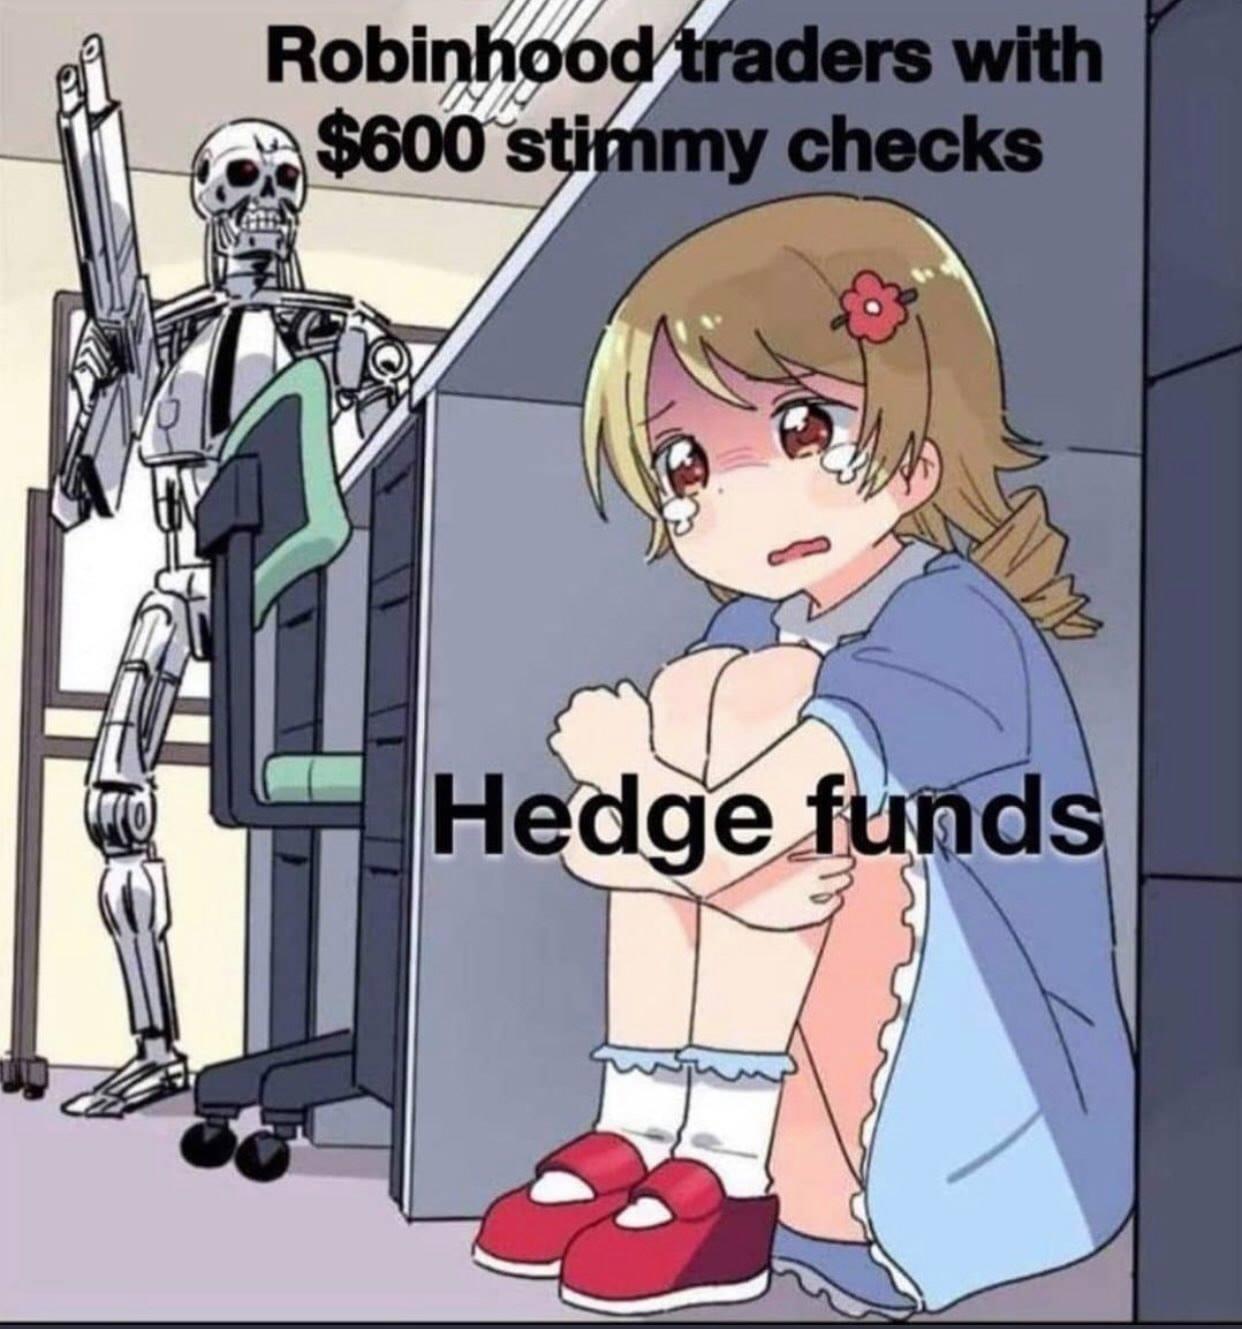 doom anime - Robinhood traders with $600 stimmy checks Hedge funds